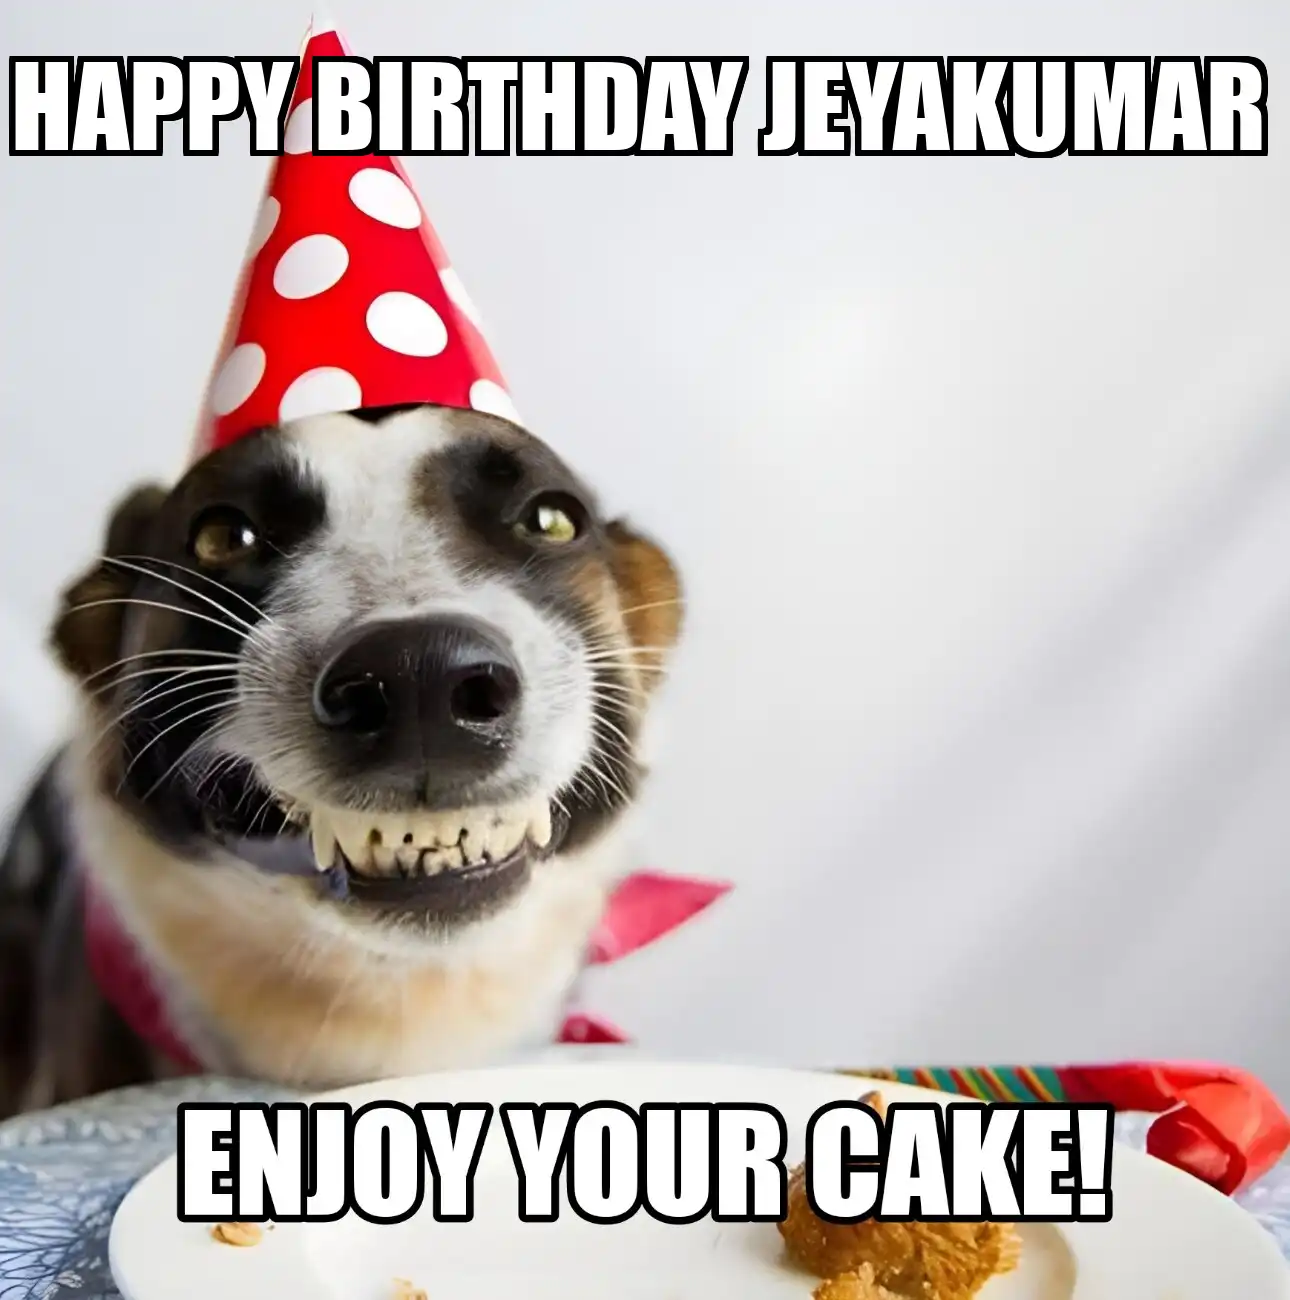 Happy Birthday Jeyakumar Enjoy Your Cake Dog Meme